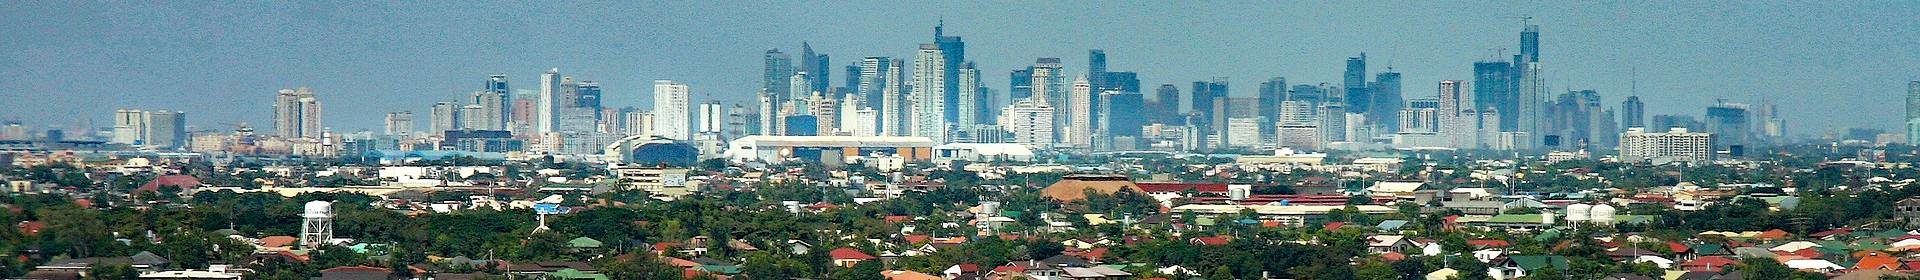 Skyline in Philippines city